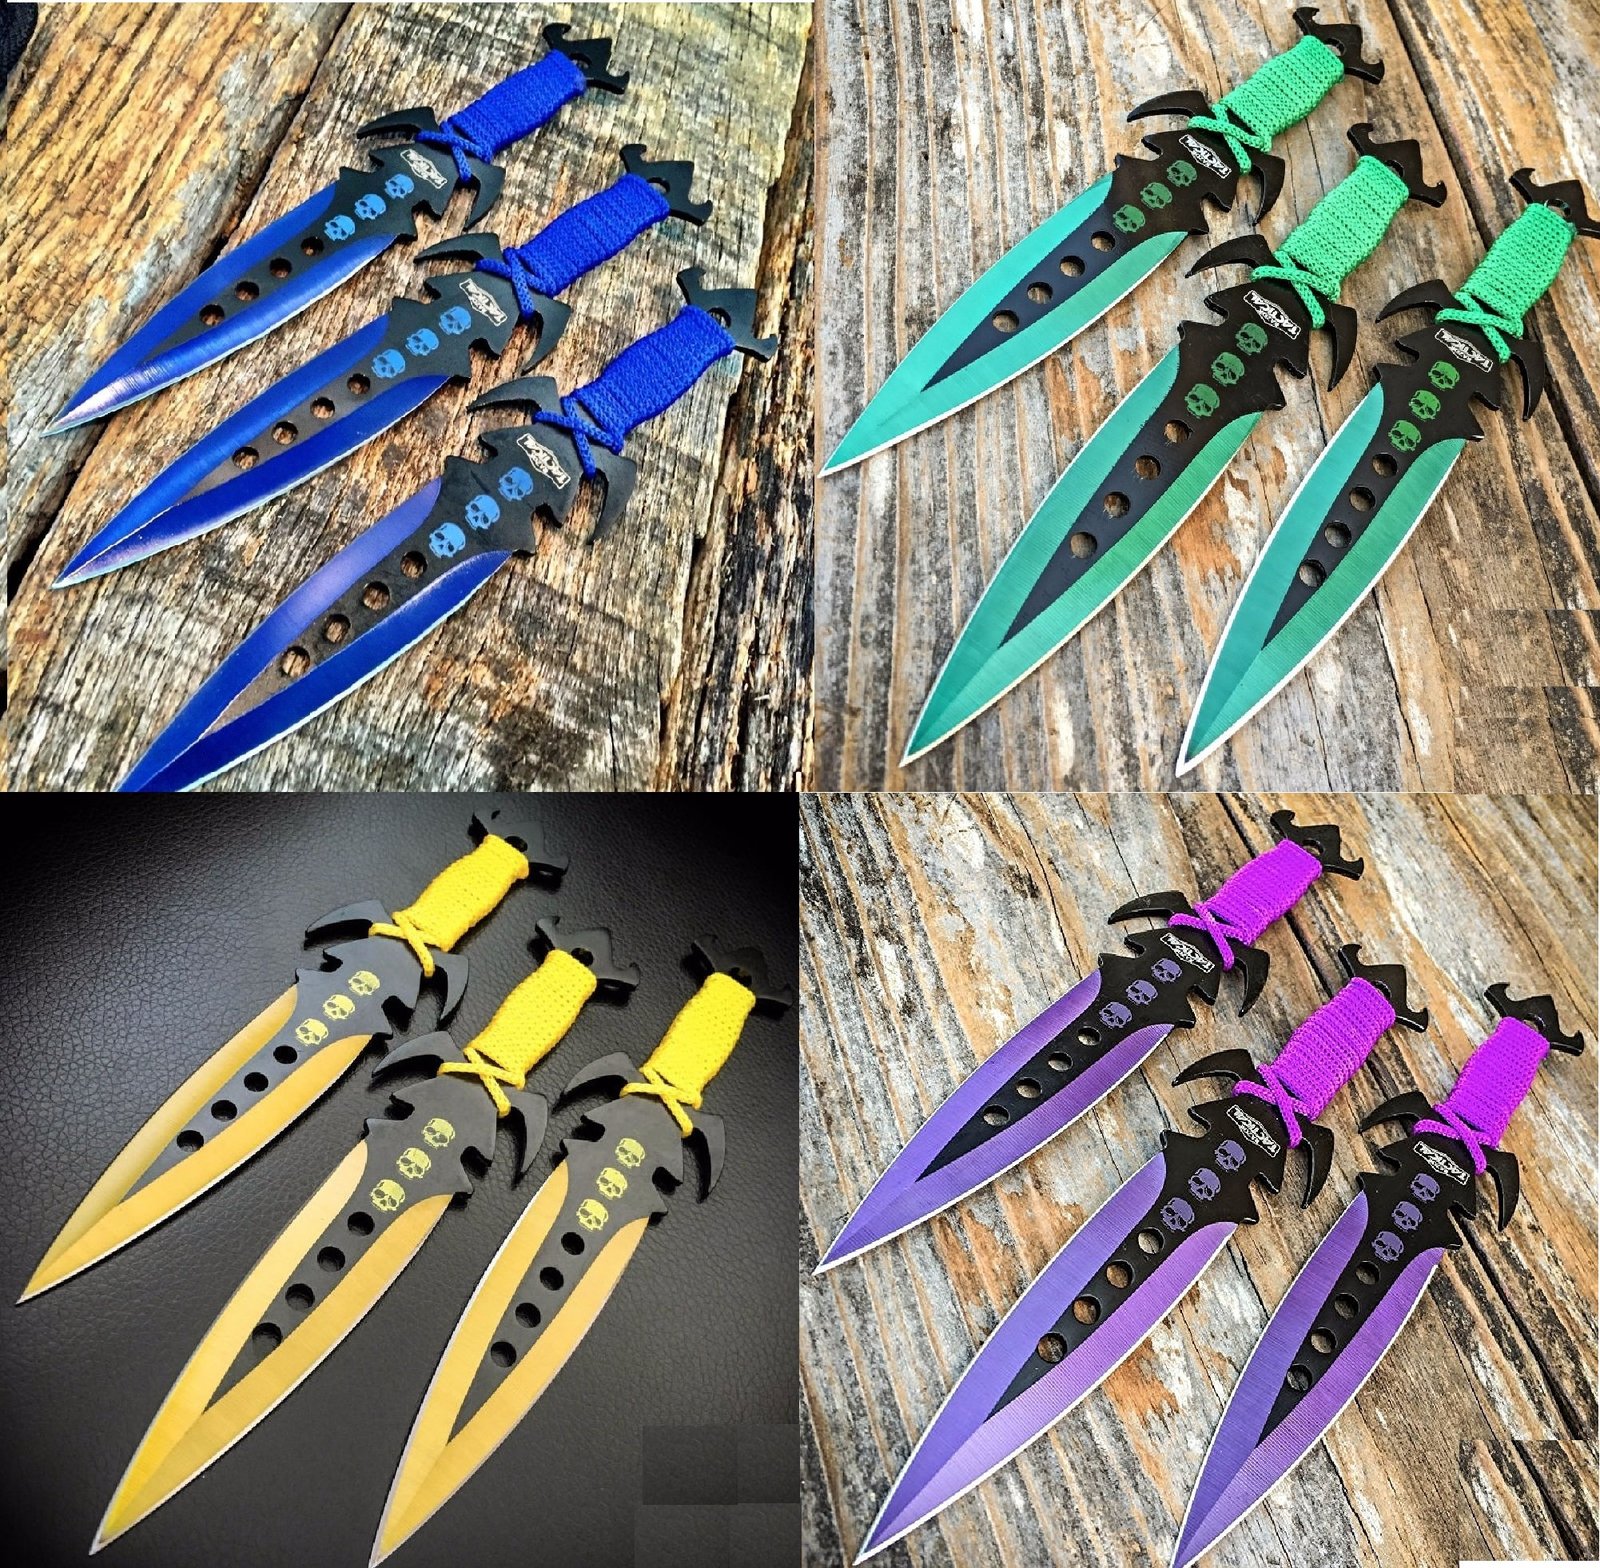 Blue Blade Throwing Knife Set - Blue Kunai - Daggers for Throwing